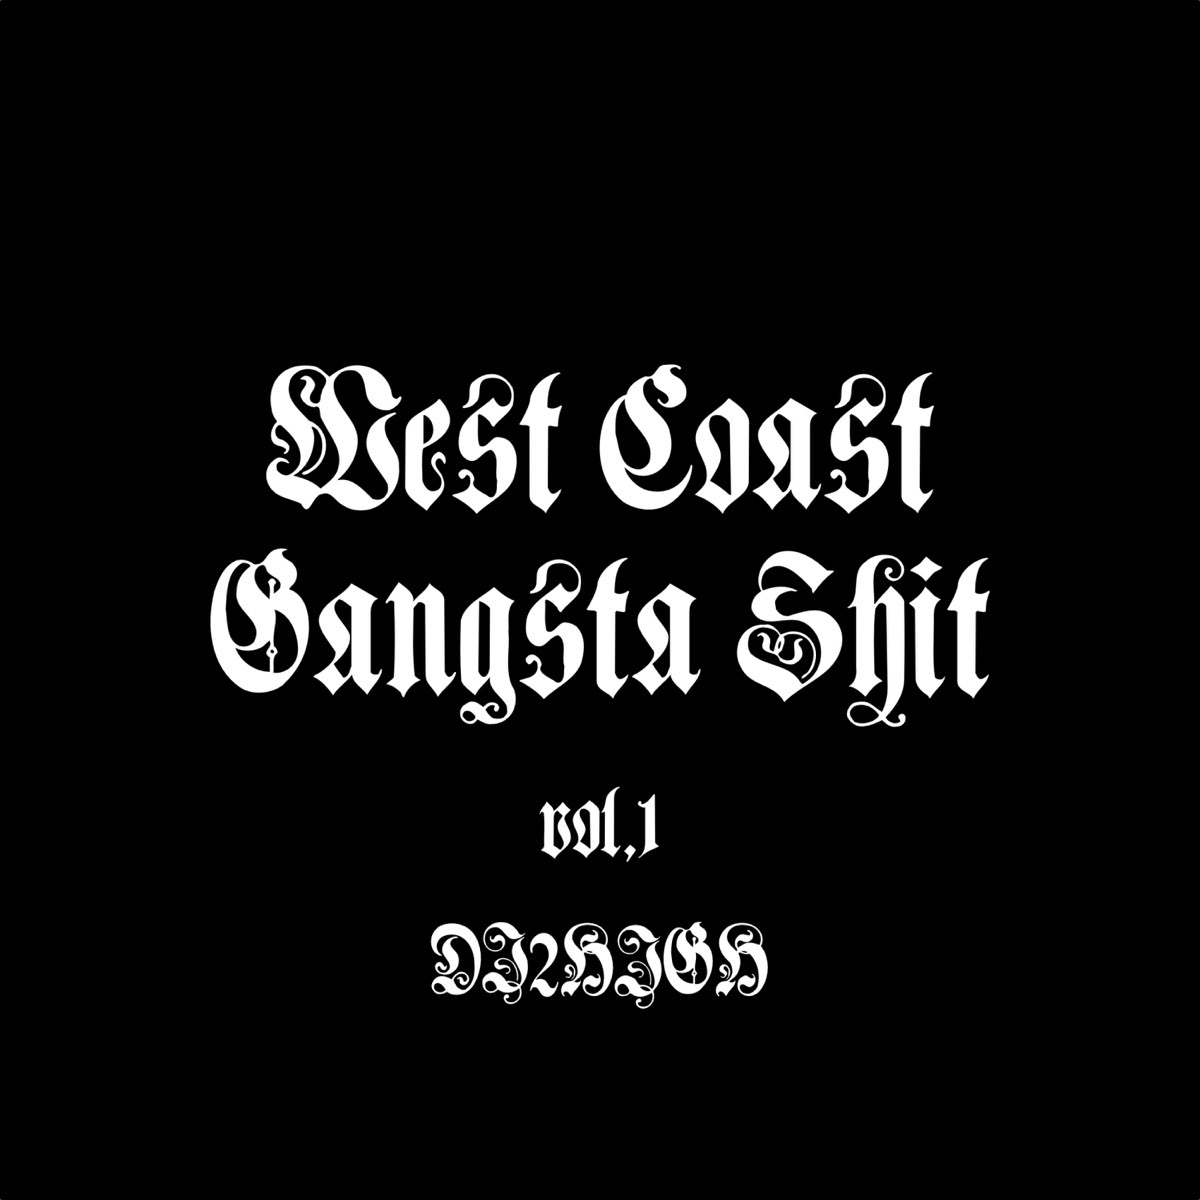 West Coast Gangsta Shit, Vol.1 - Album by DJ 2High - Apple Music